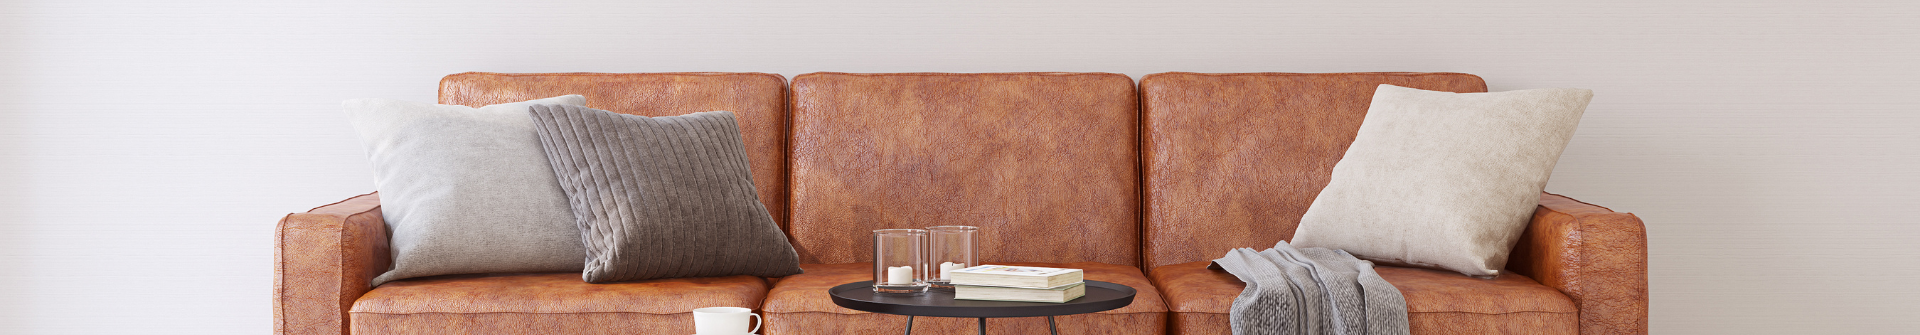 Full & Half Leather Recliner Sofa